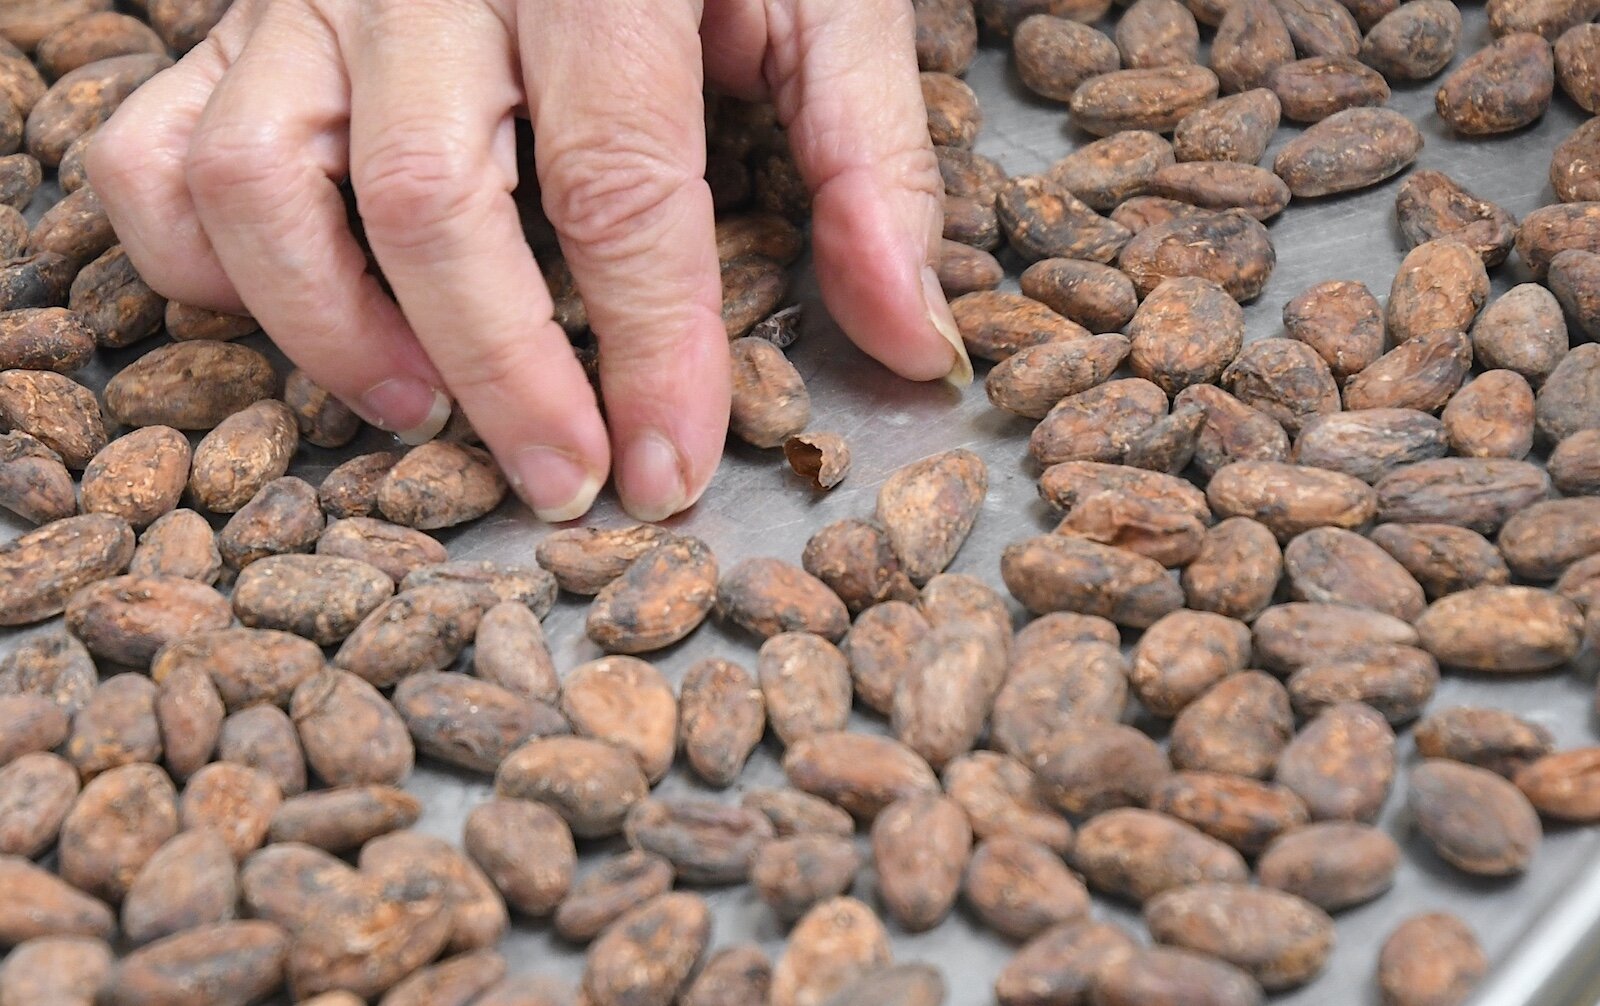 Karen Pacella sorts through raw cacao beans prior to roasting.